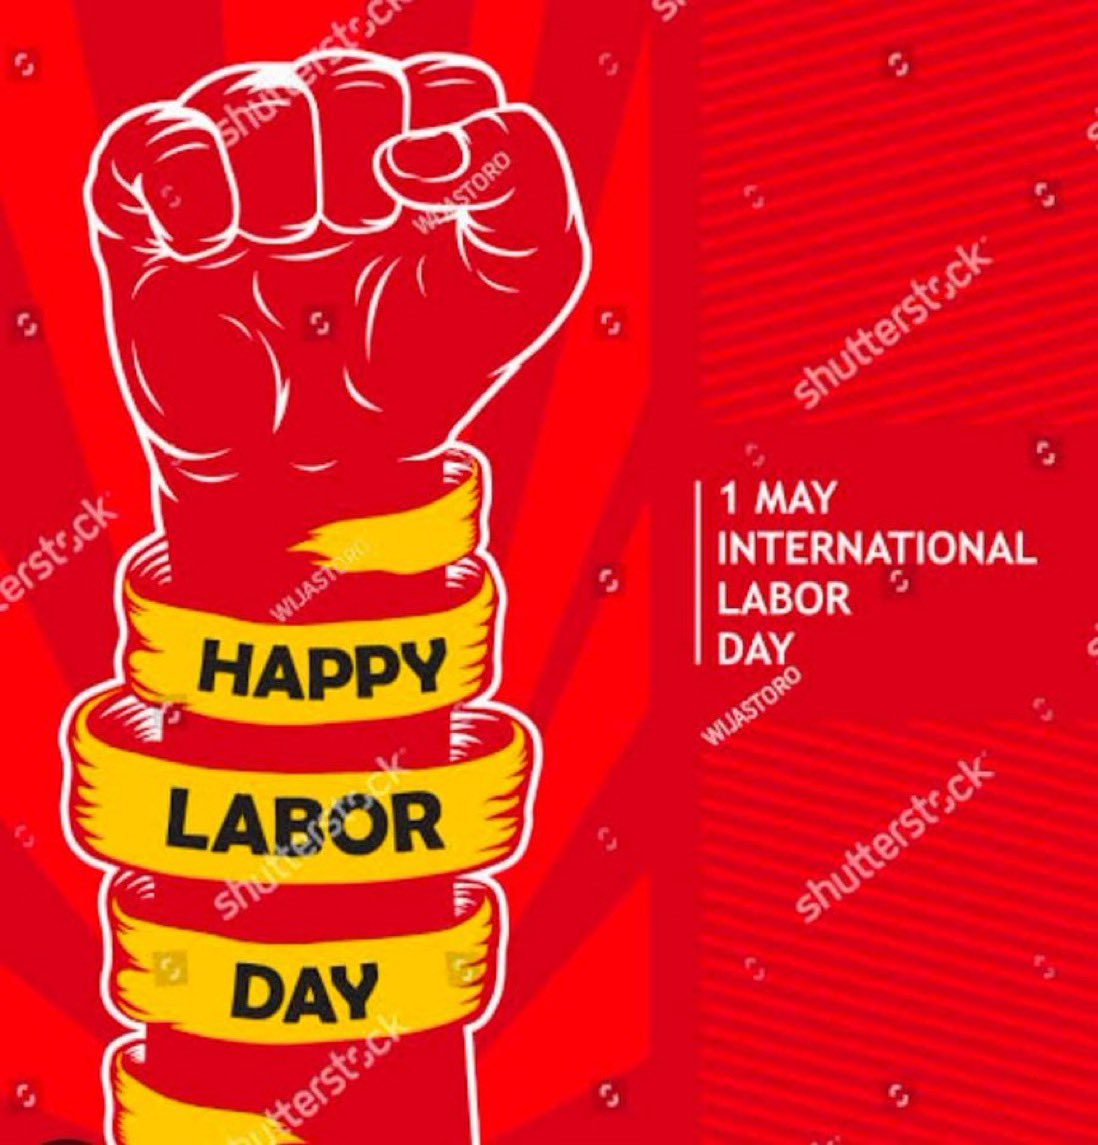 @sanjaybpi #LabourDay2024
#WorkLifeBalance
#InternationalLabourDay